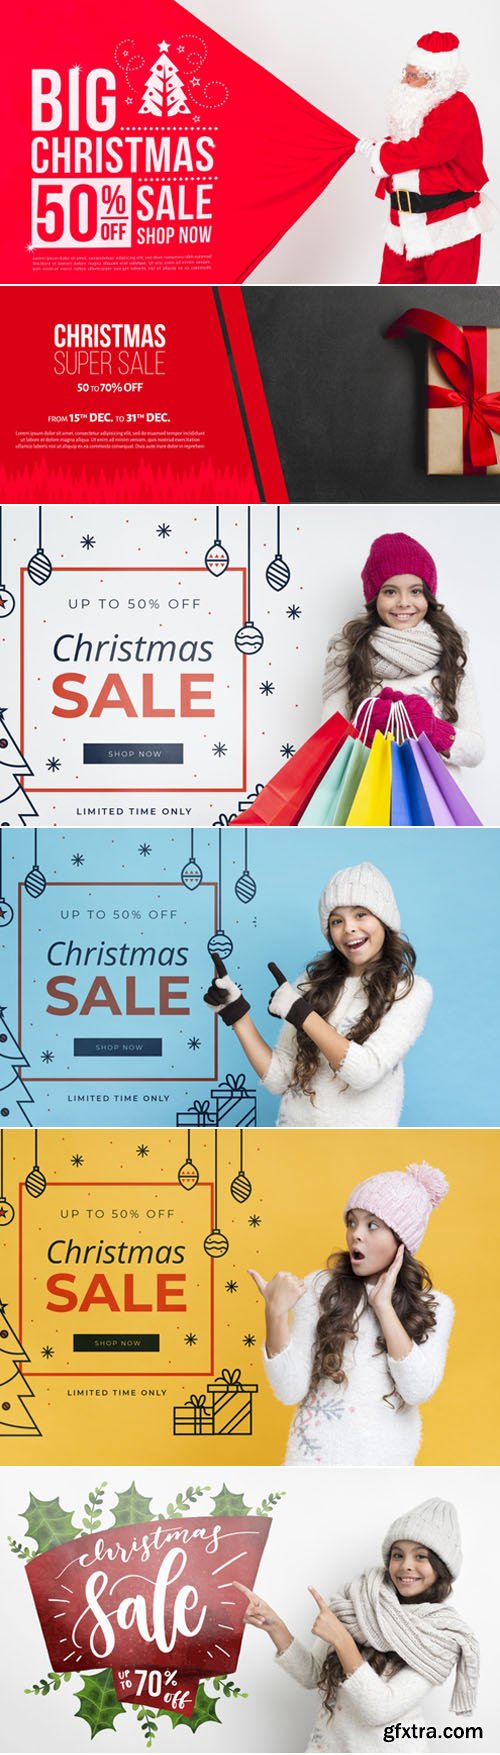 Holiday Sales PSD Mockups Templates 2